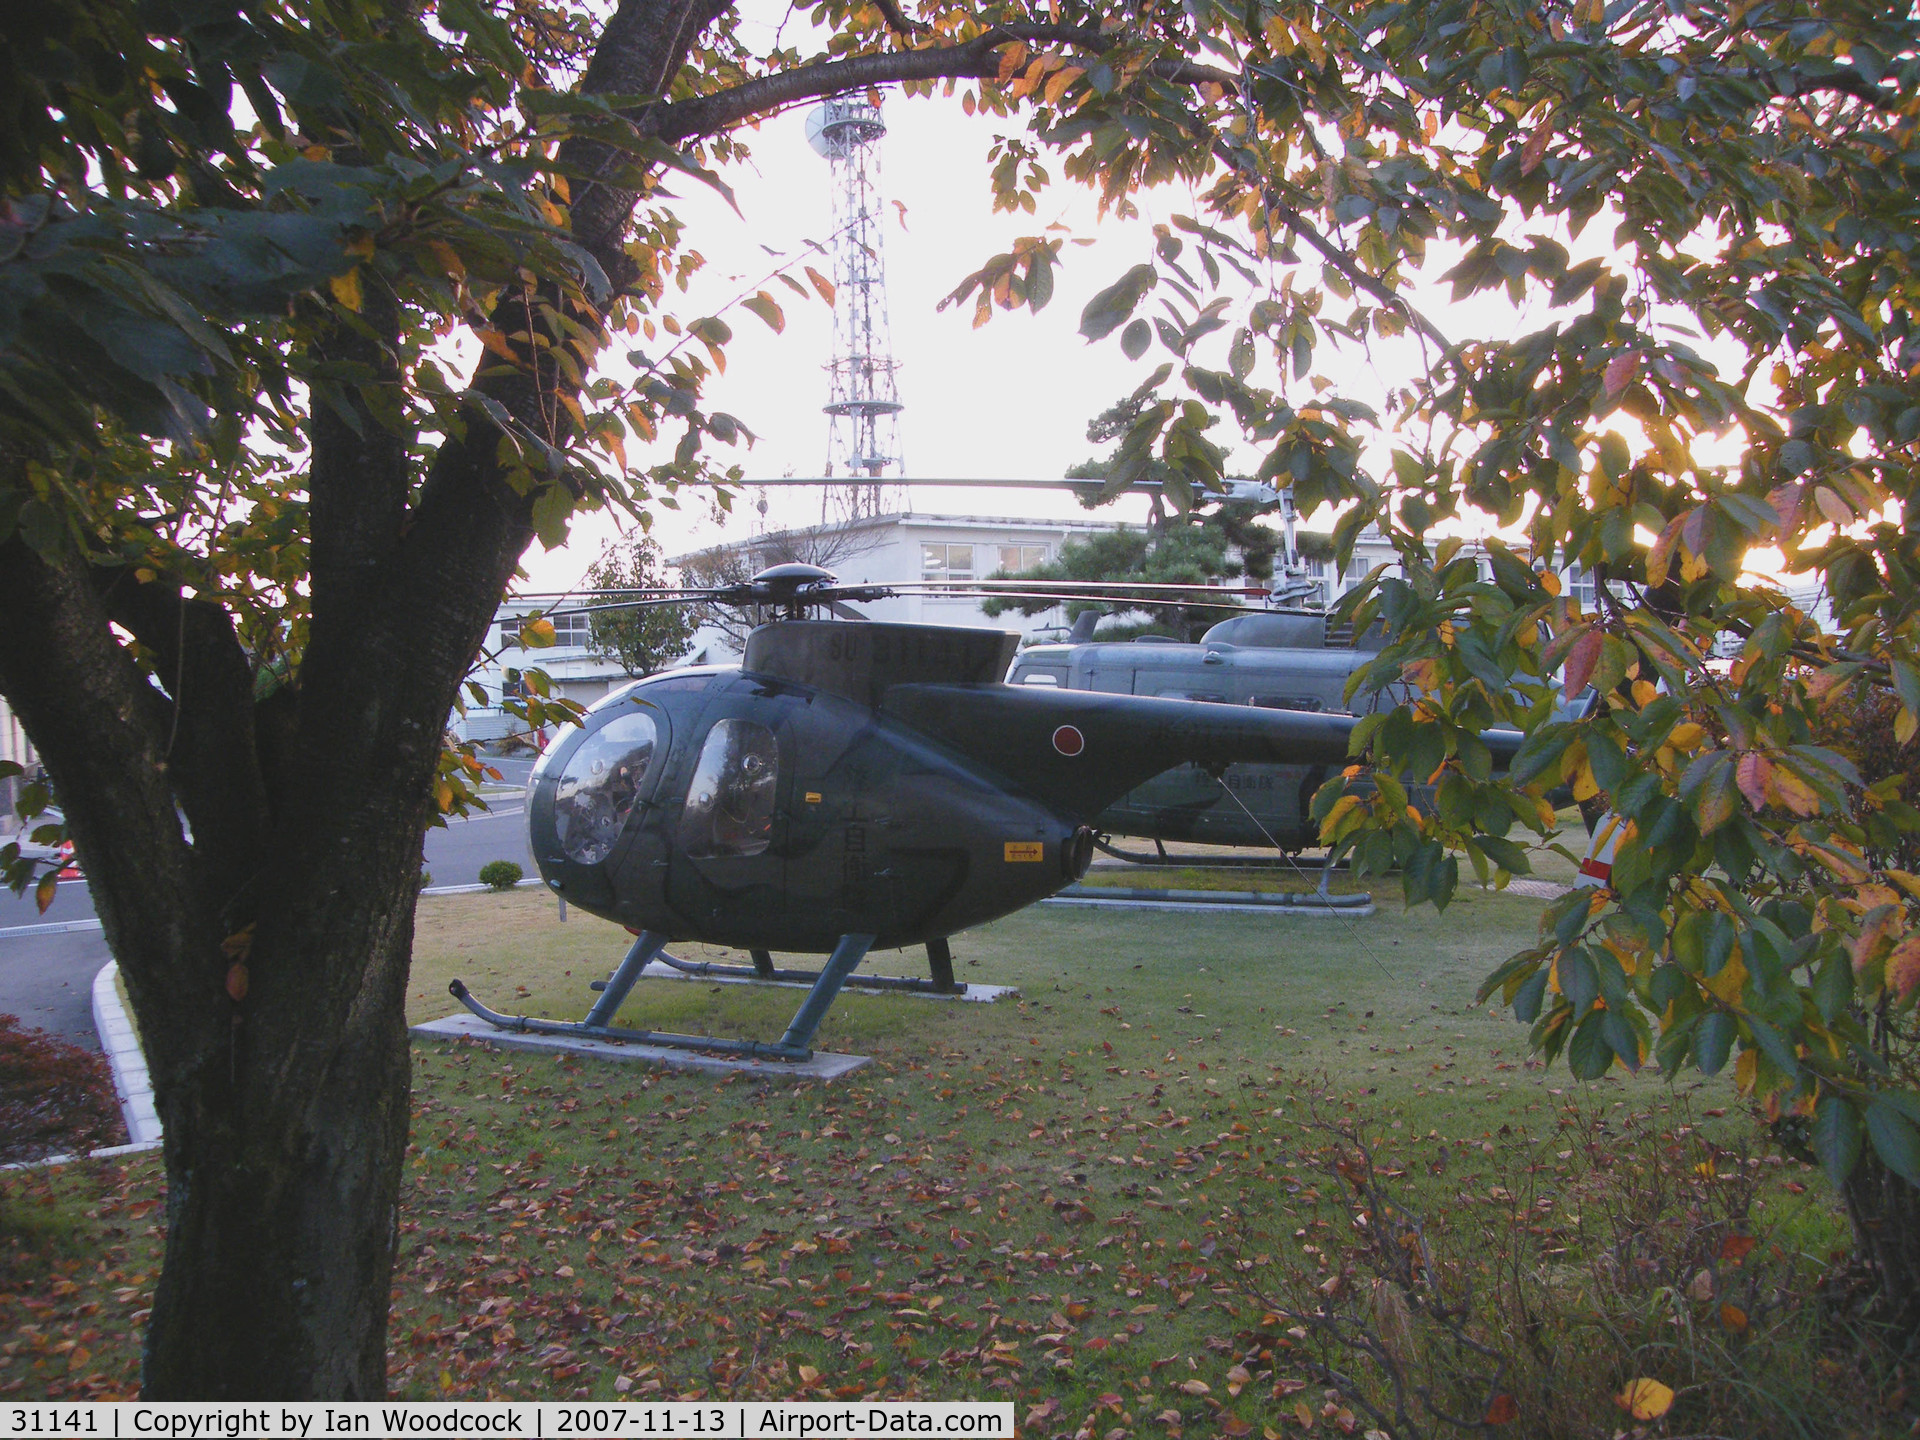 31141, Hughes (Kawasaki) OH-6D C/N 6442, OH-6D/Utsonomiya-Tochigi/Preserved